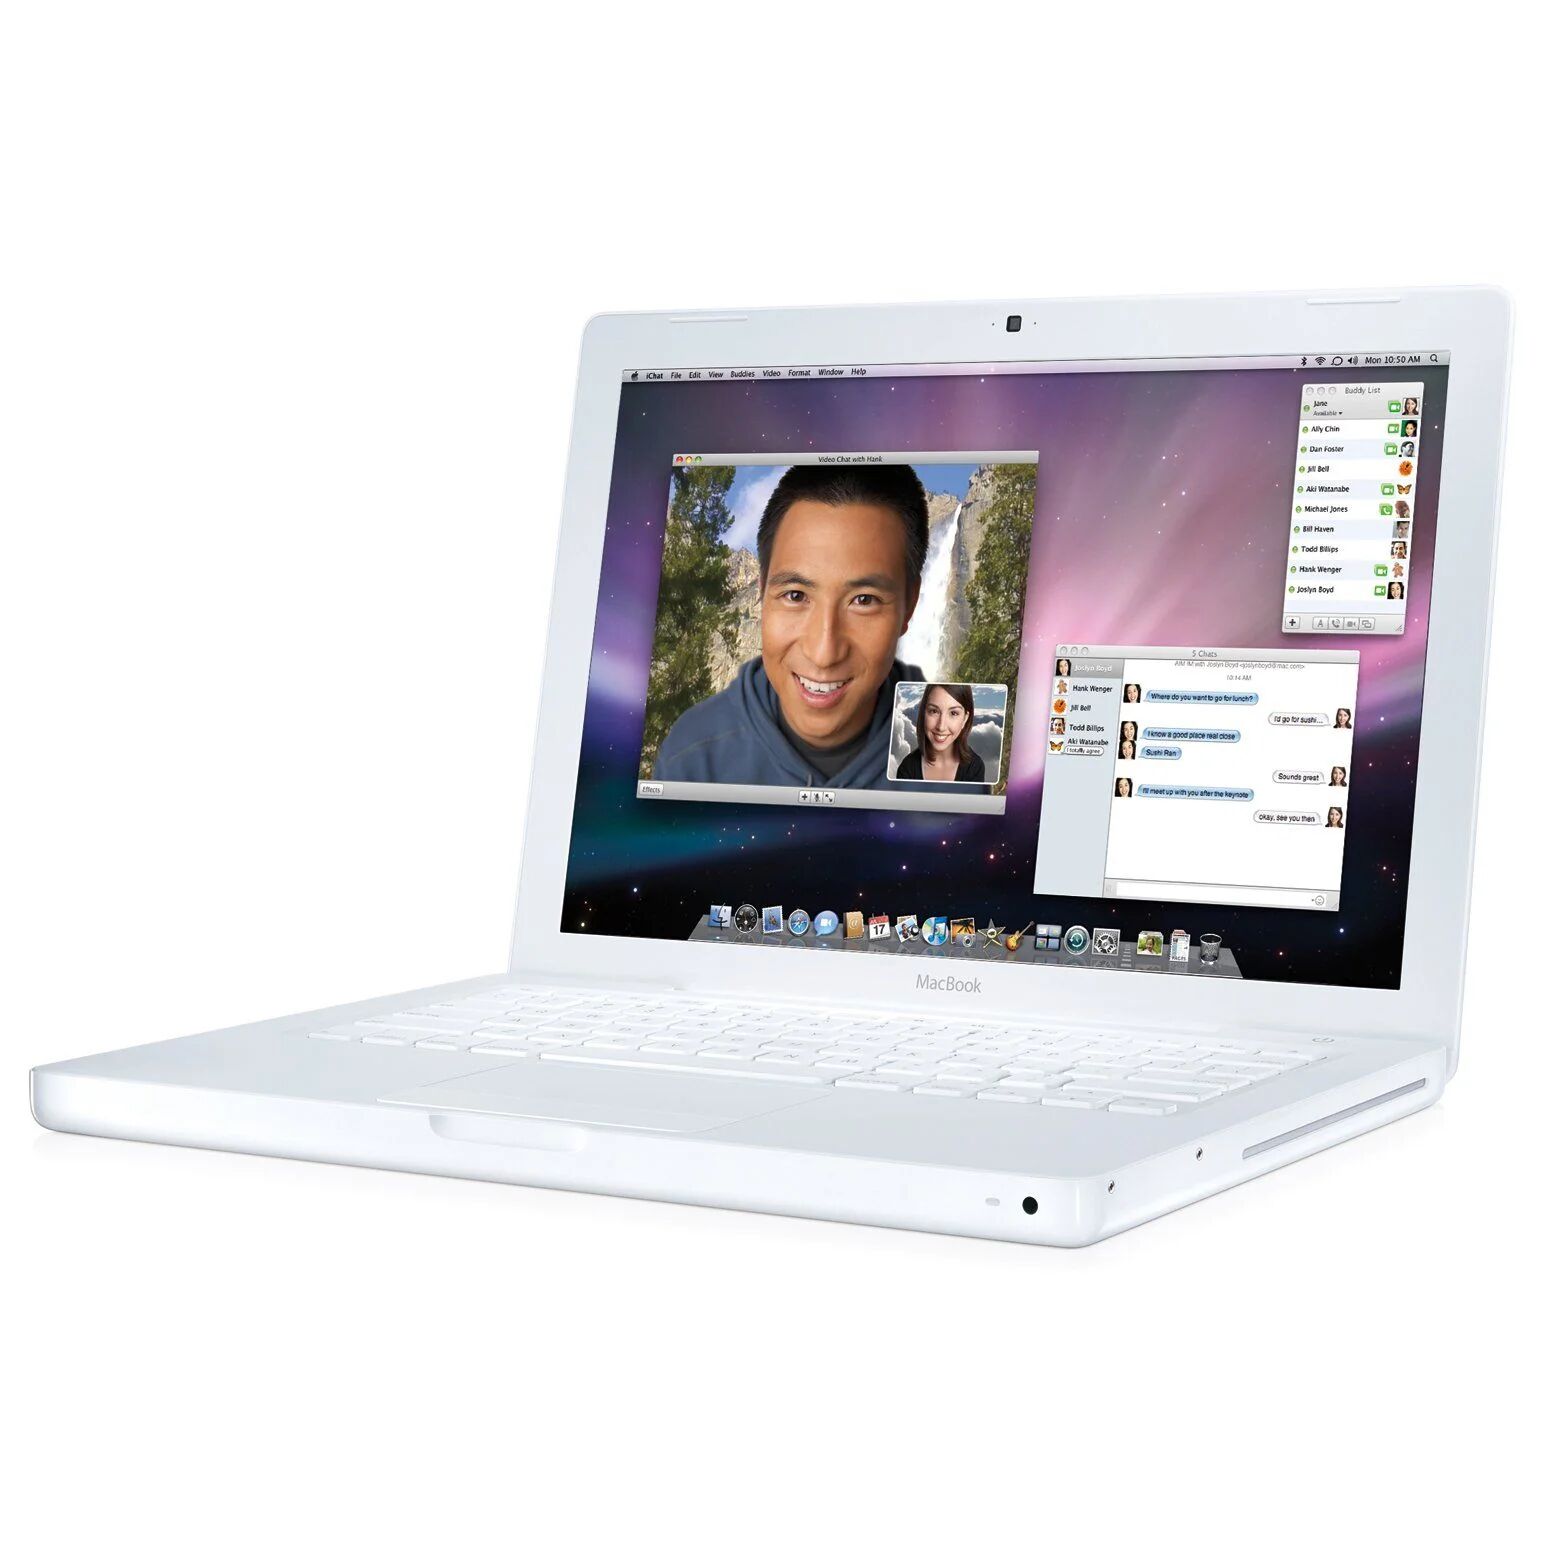 DailySale Apple Macbook A1181 2.4GHz Intel Core 2 Duo T8100 (Refurbished)